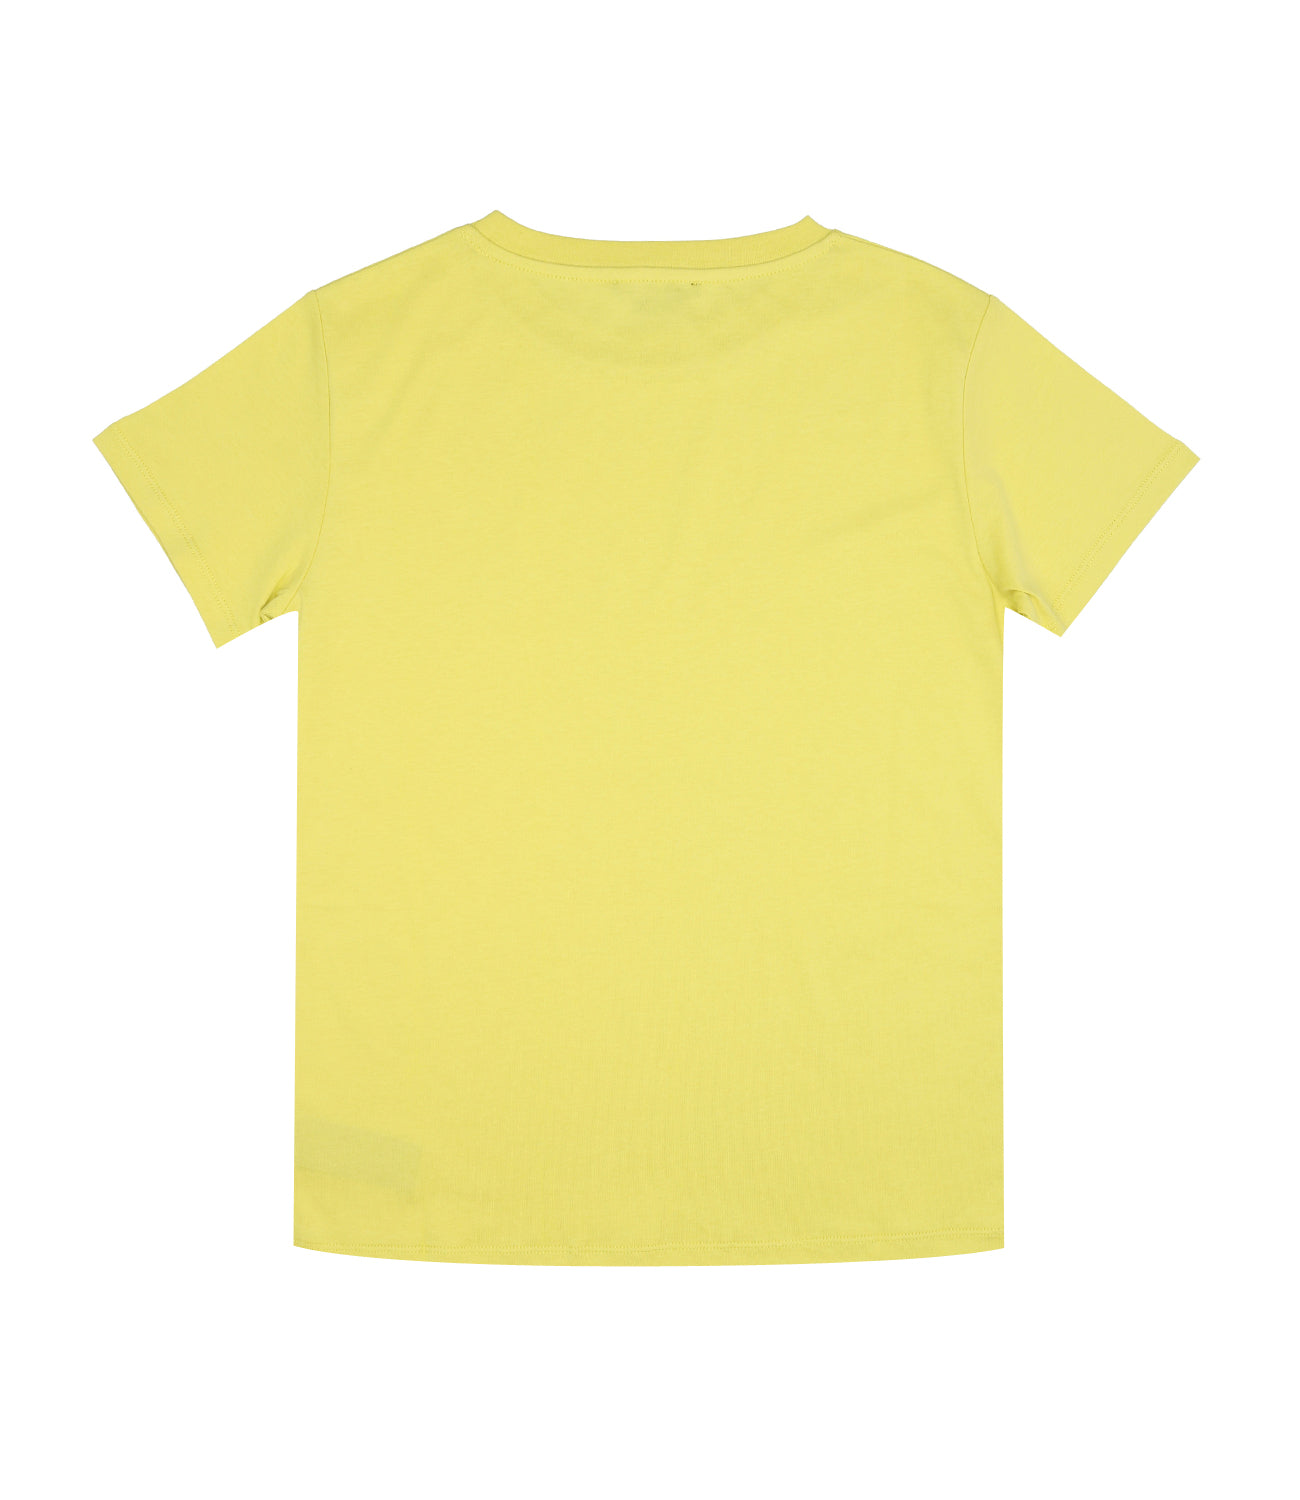 Balmain Kids | Yellow T-Shirt